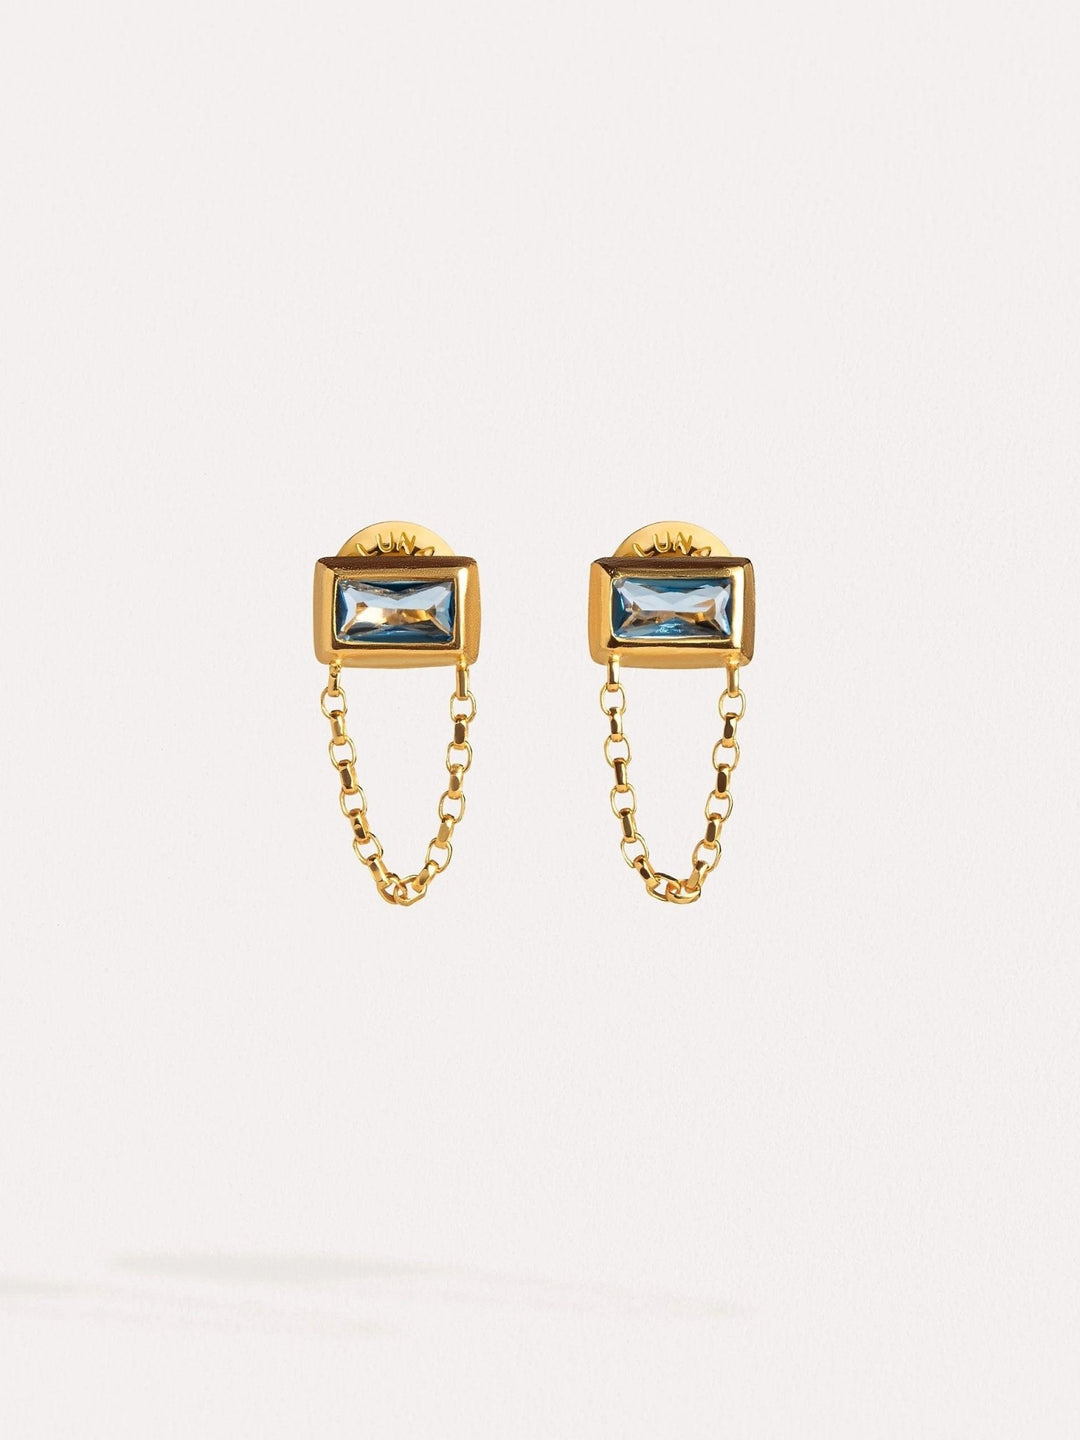 Palipa Blue Crystal Stud Earrings - Lab Blue ZirconAnniversary GiftBlue EarringsLunai Jewelry